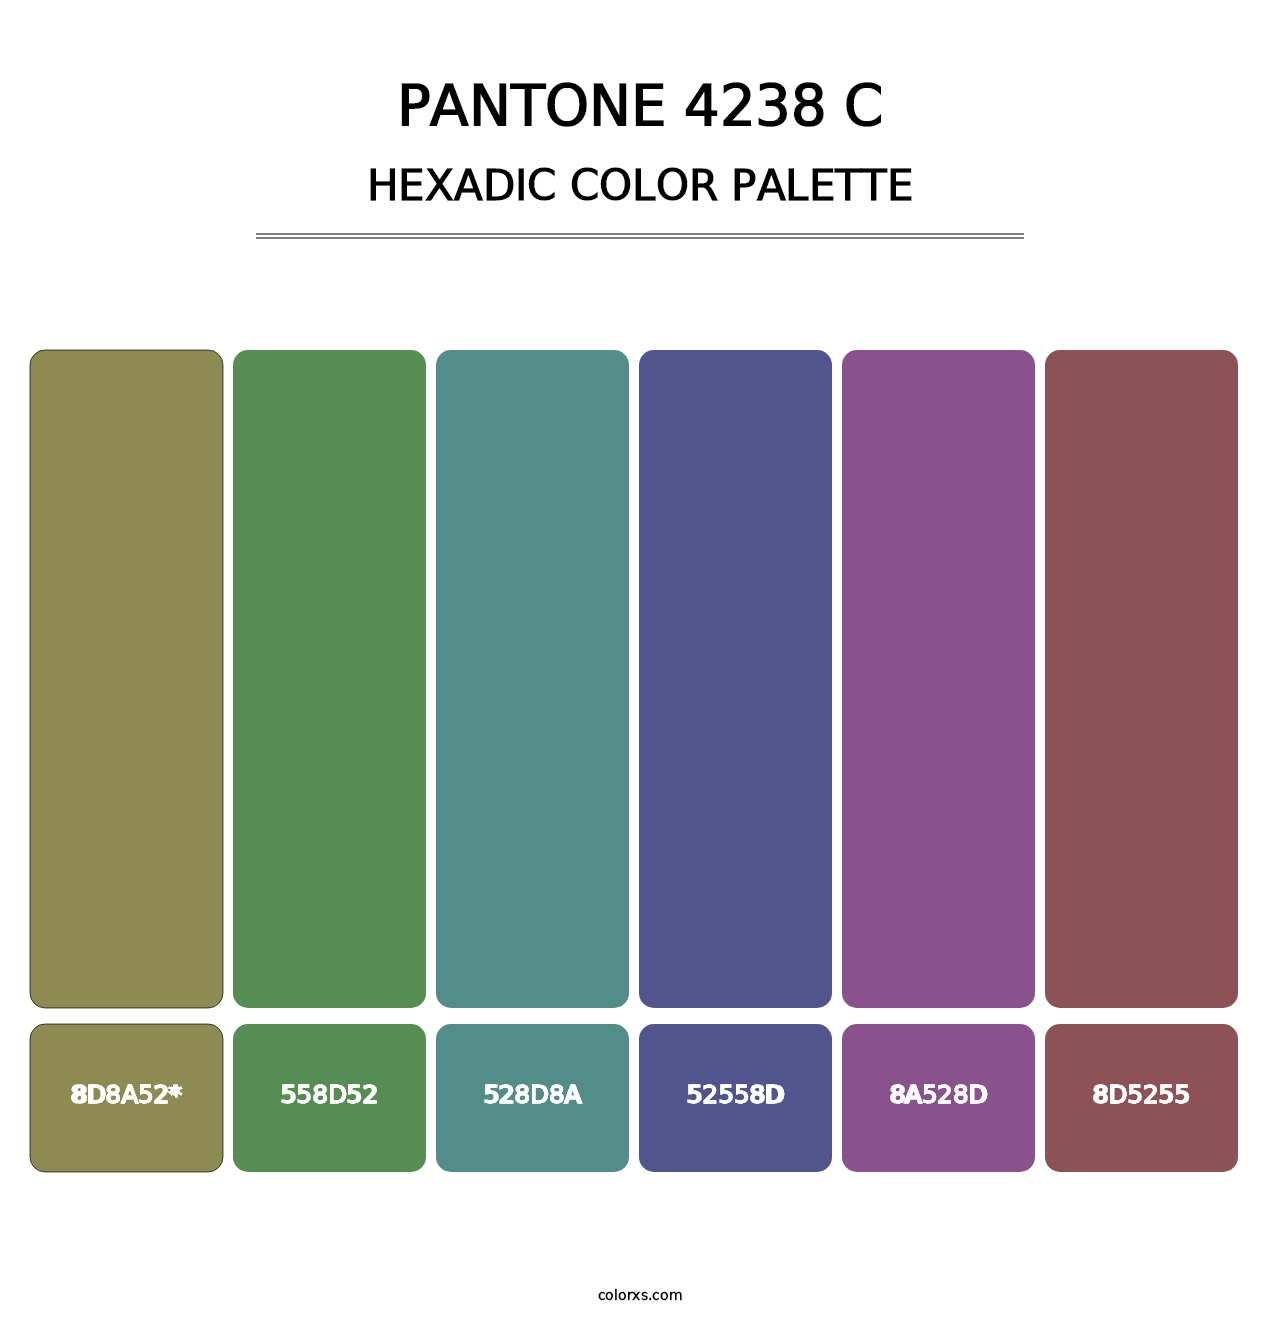 PANTONE 4238 C - Hexadic Color Palette